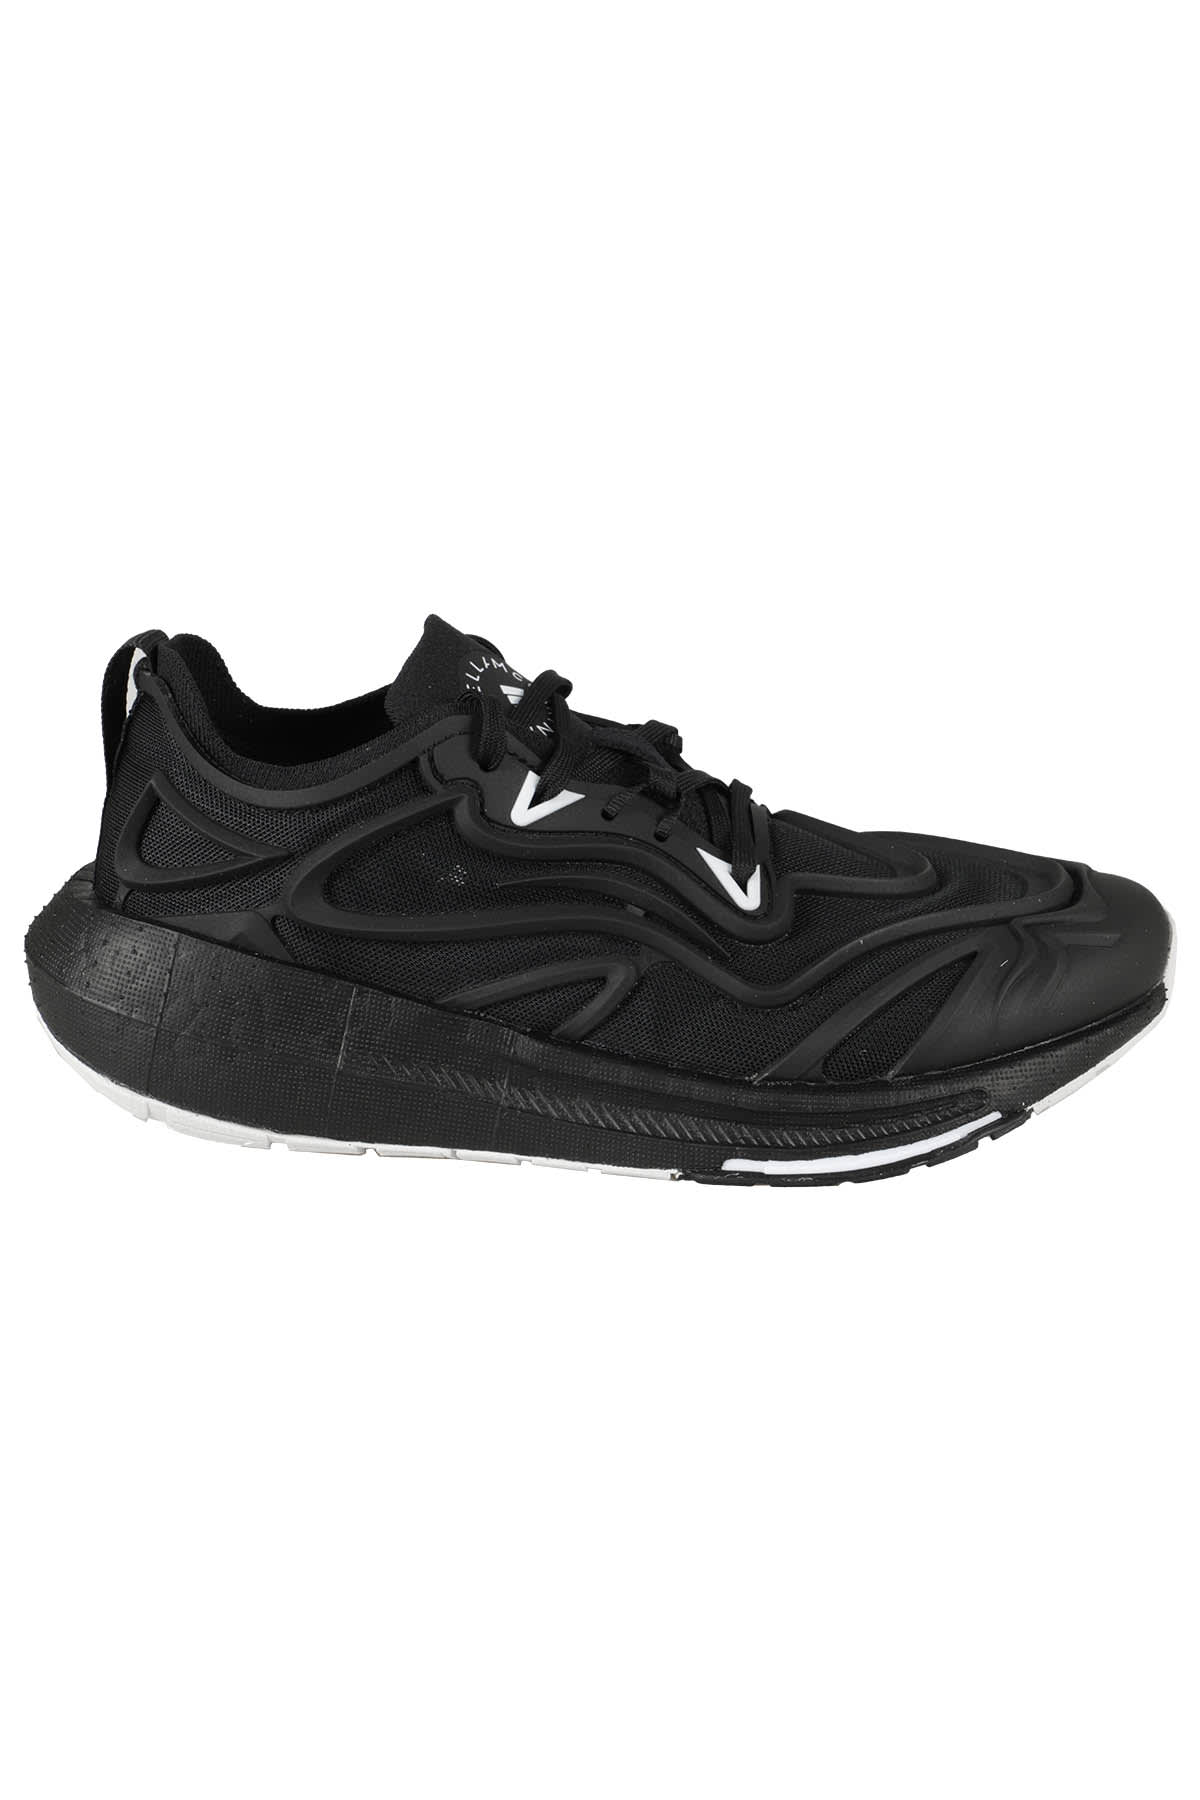 Shop Adidas By Stella Mccartney Asmc Ultraboost Speed In Black White